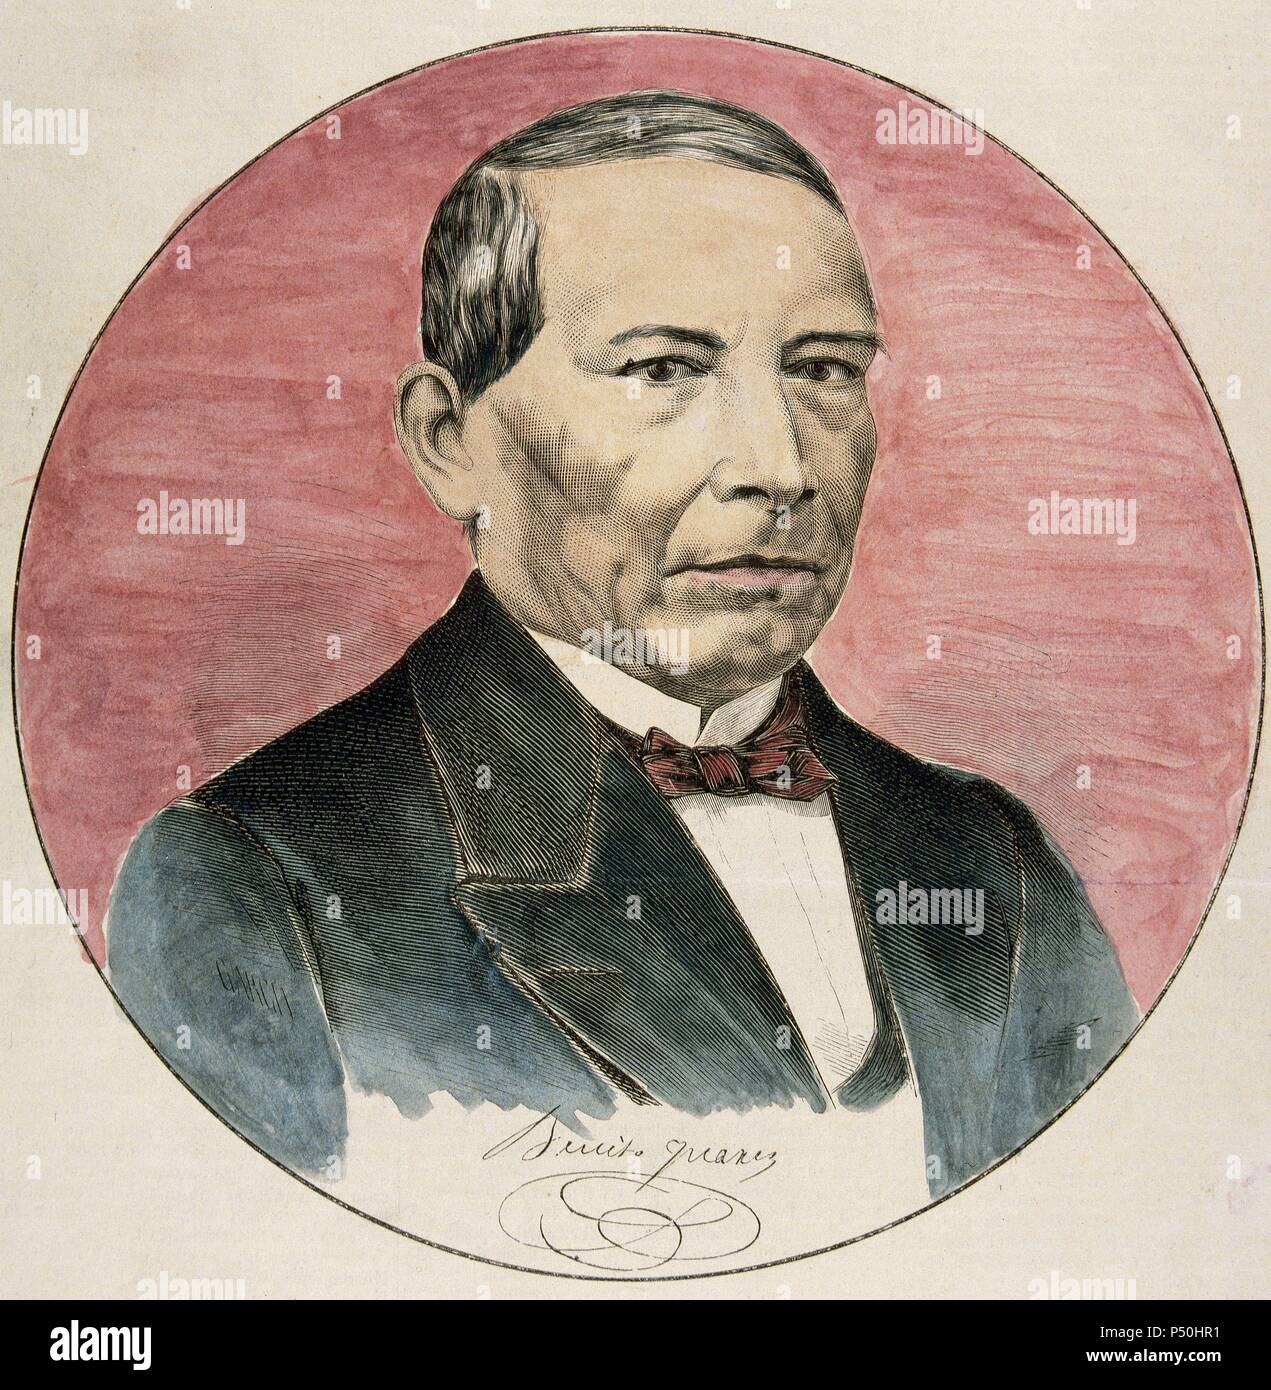 Benito Juarez (1806-1872). Mexican politician. Colored engraving. 